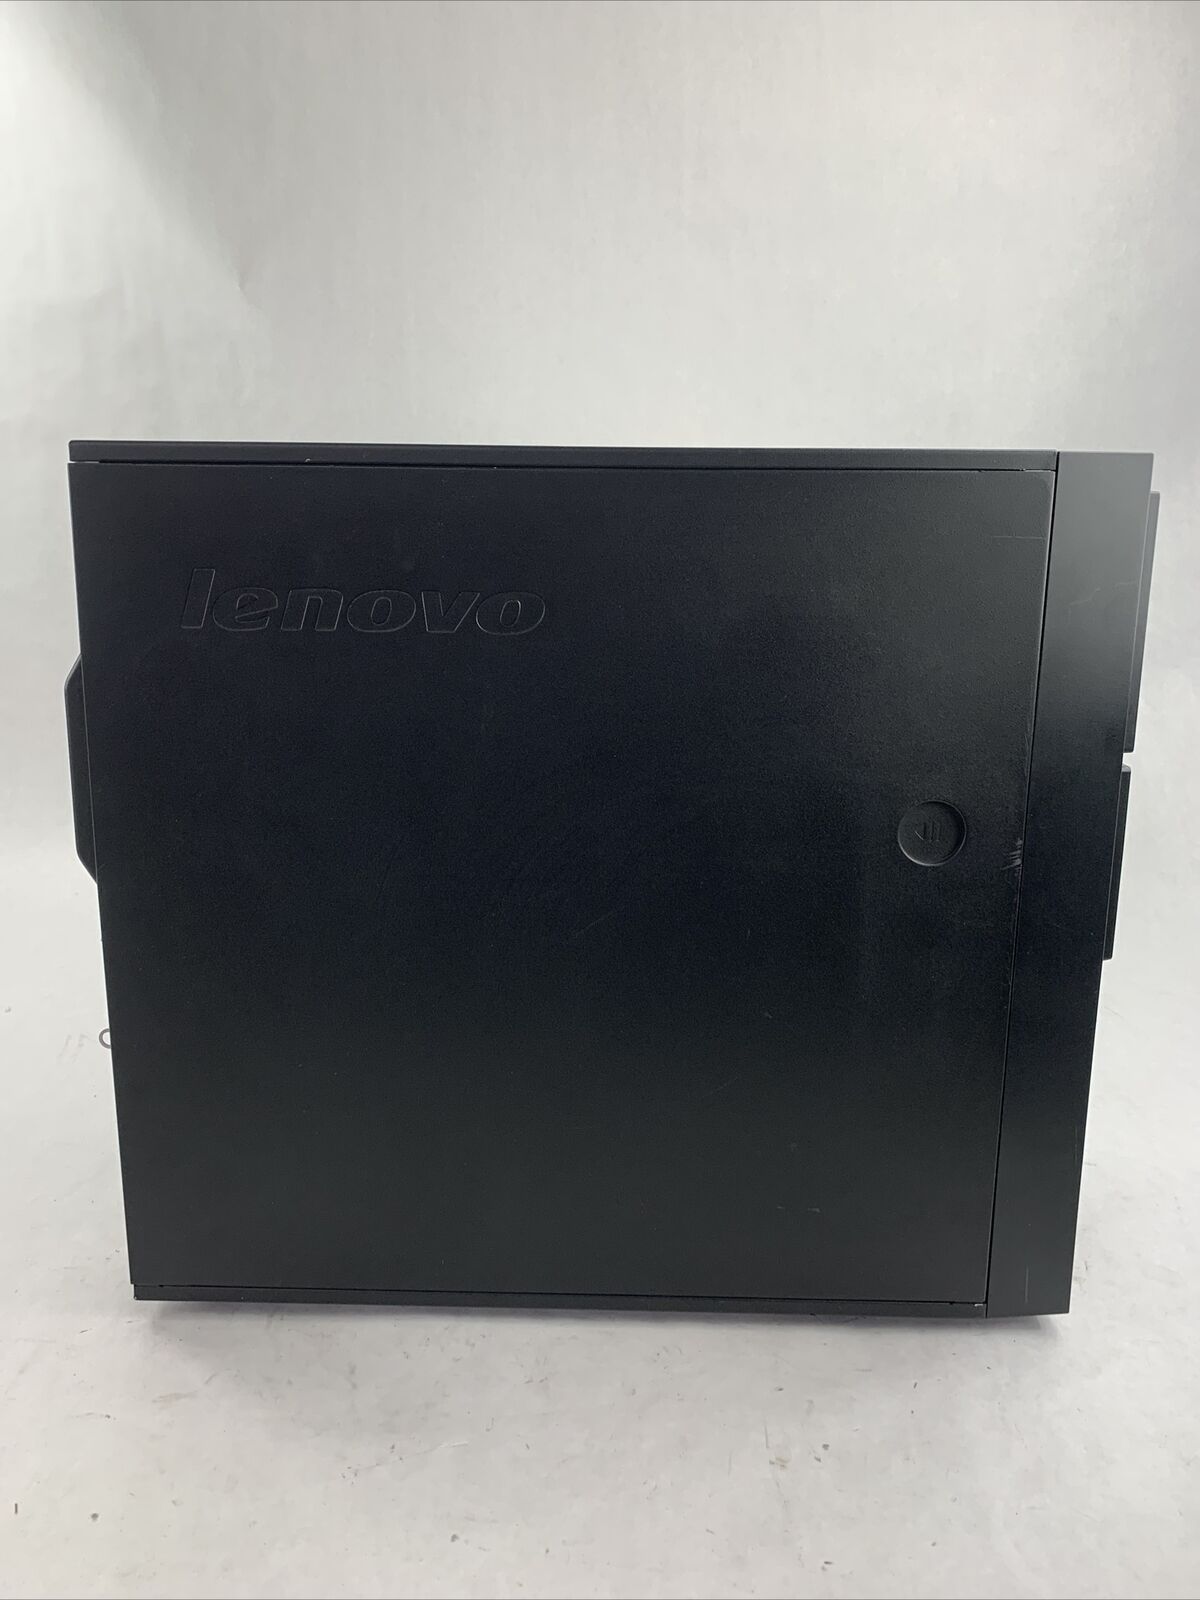 Lenovo ThinkServer TS200V MT Intel Pentium G 6950 2.8GHz 4GB RAM No HDD No OS